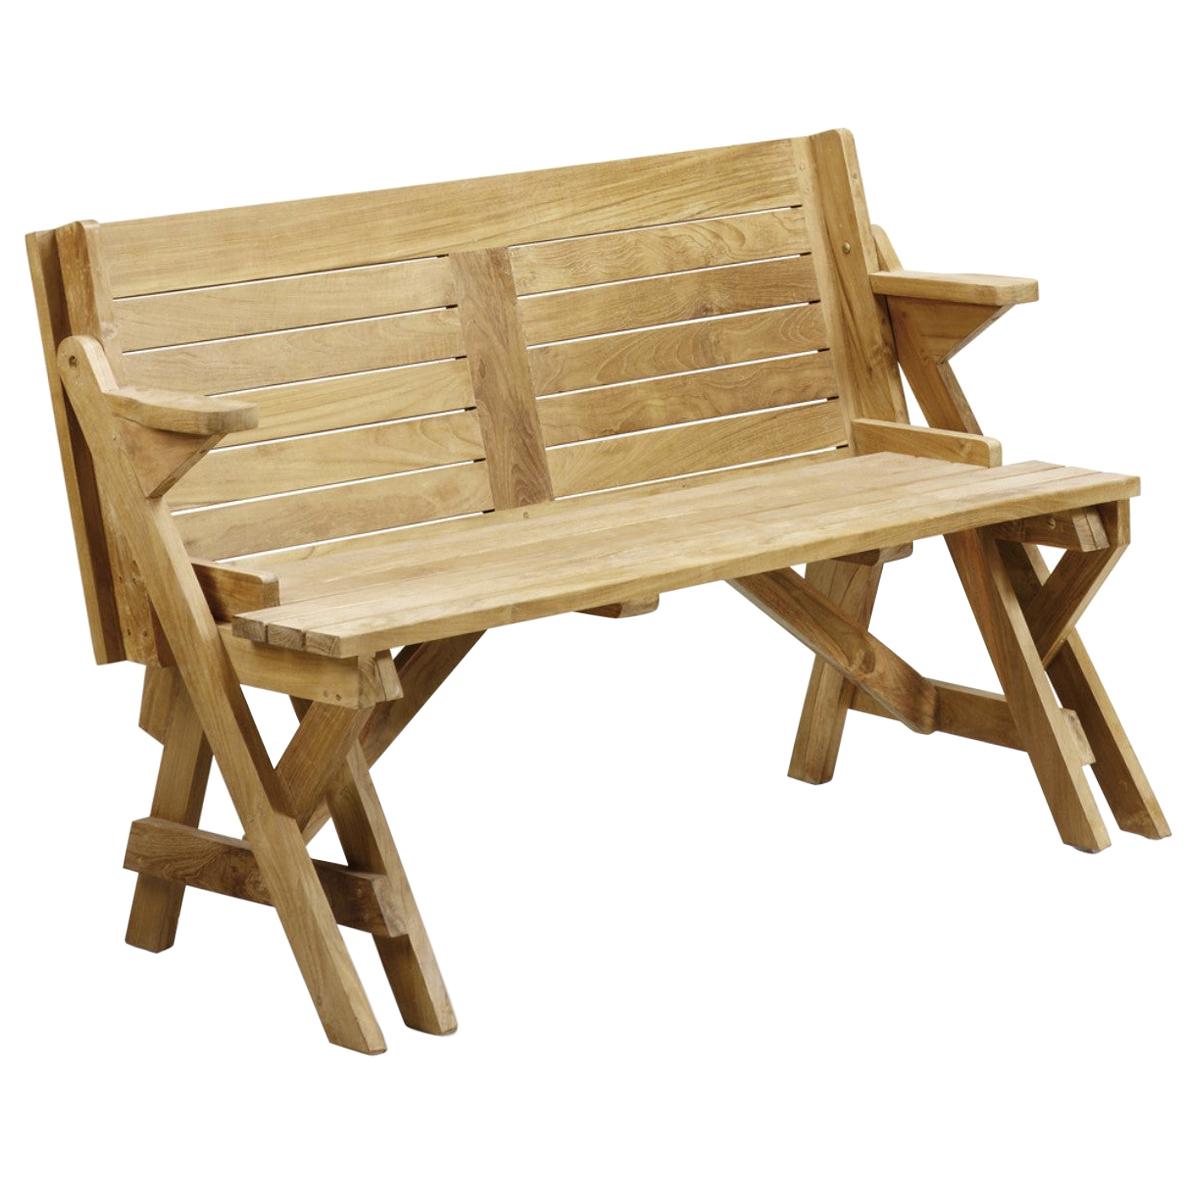 New Garden Convertible Teak Two Seats Bench, Picnic Table